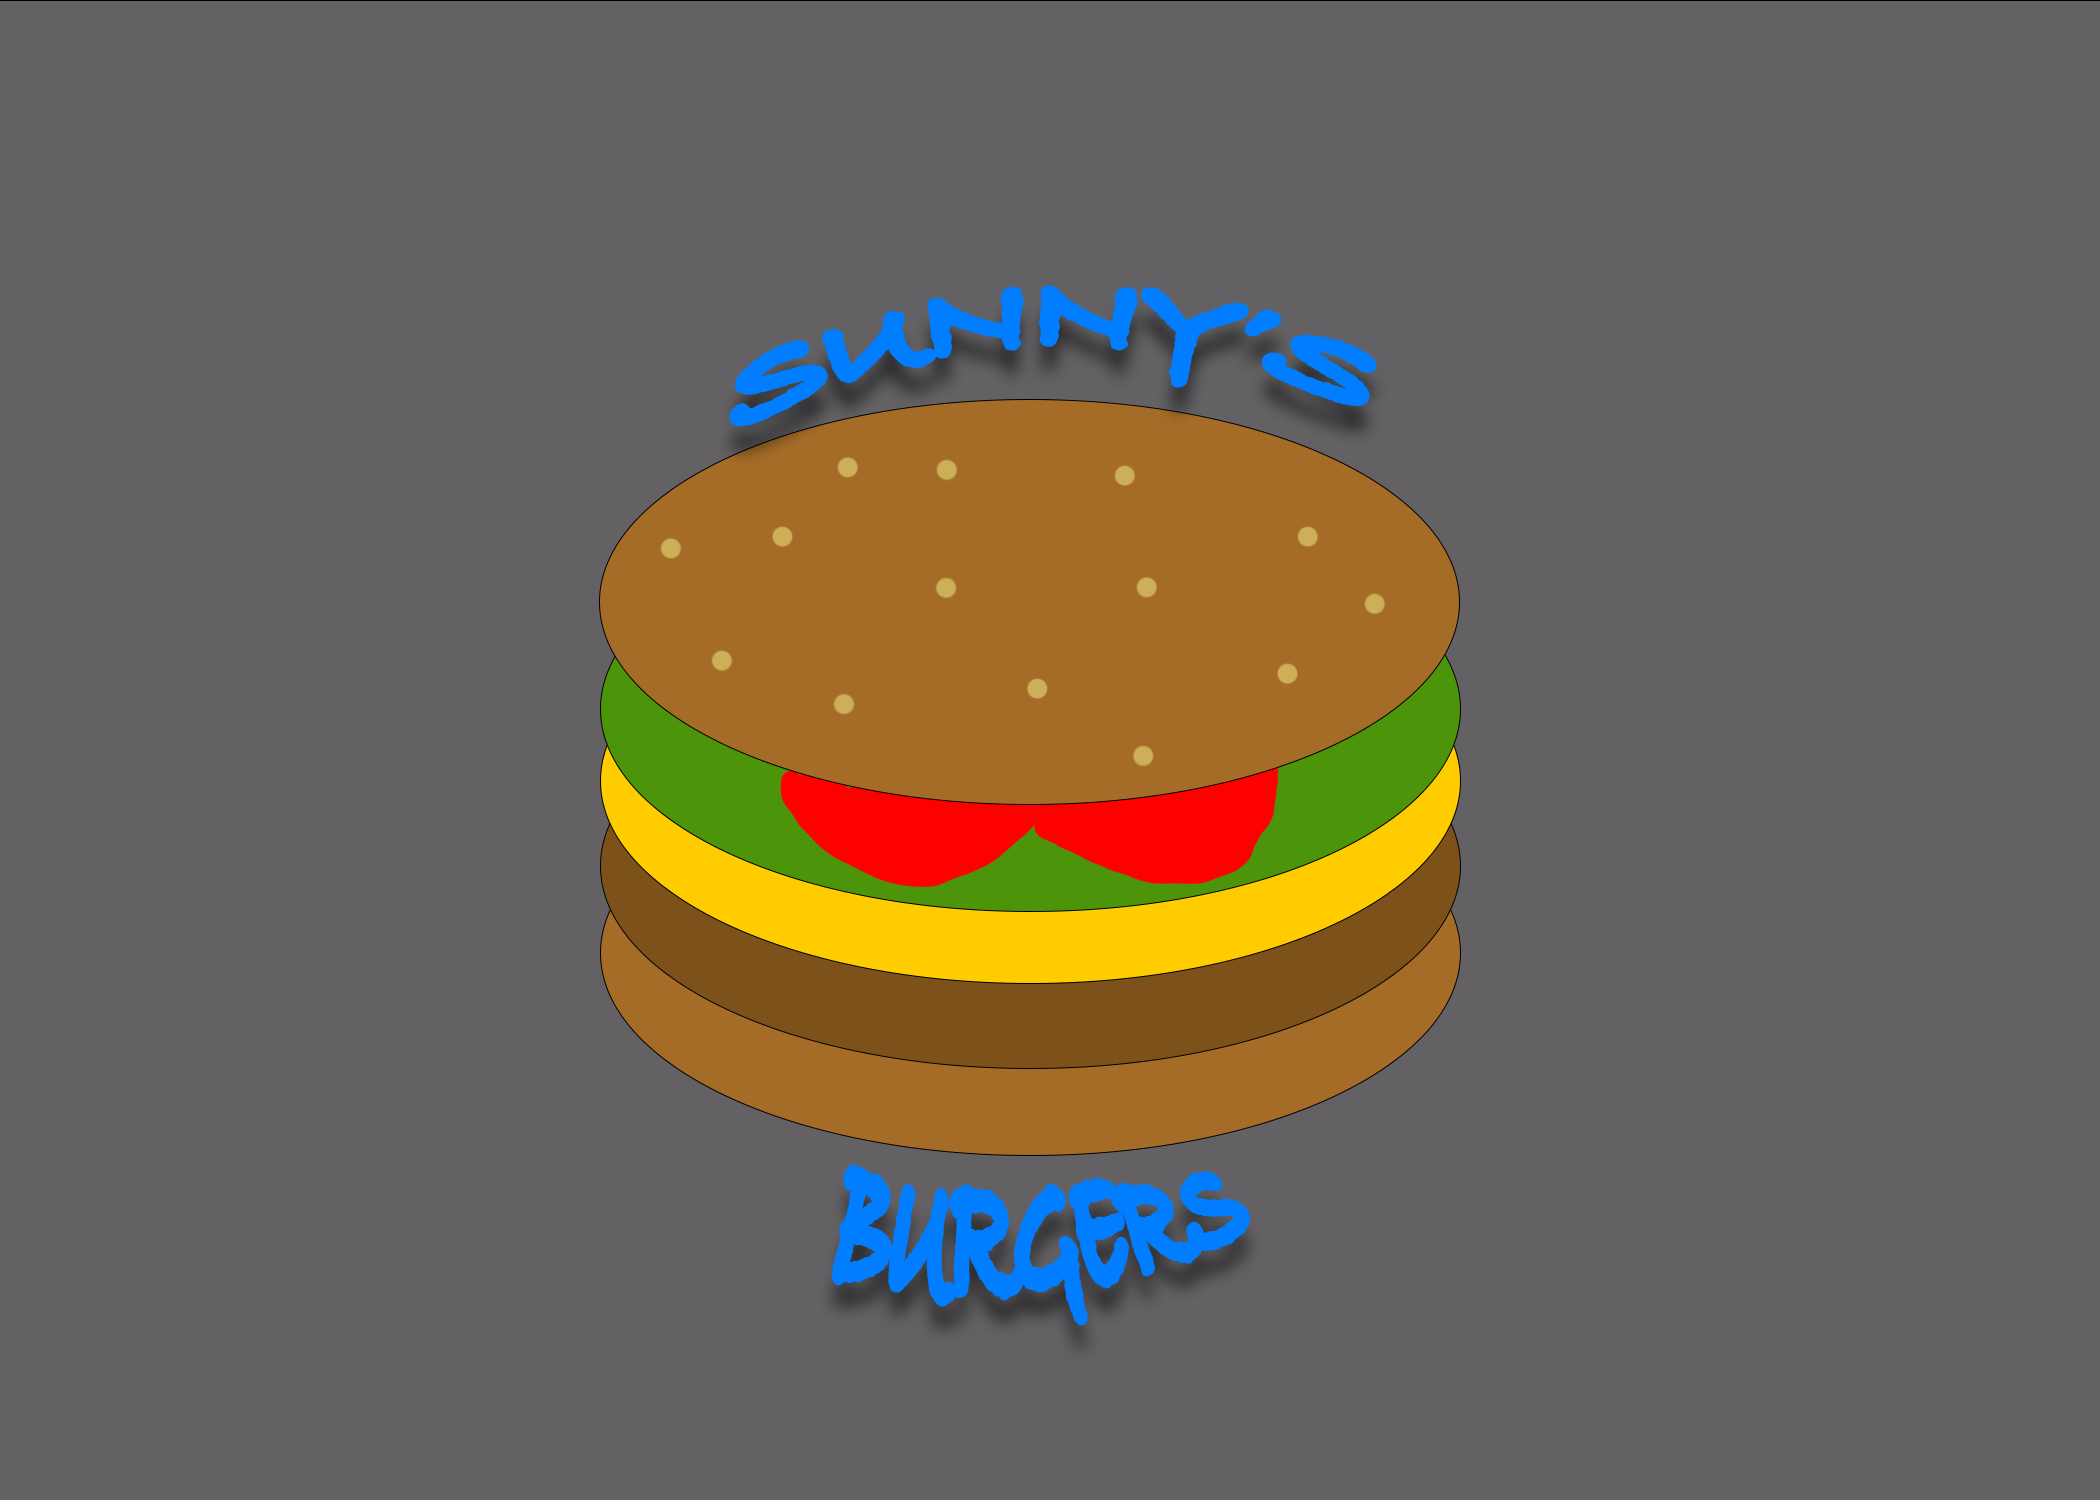 Sunny's Burger logo